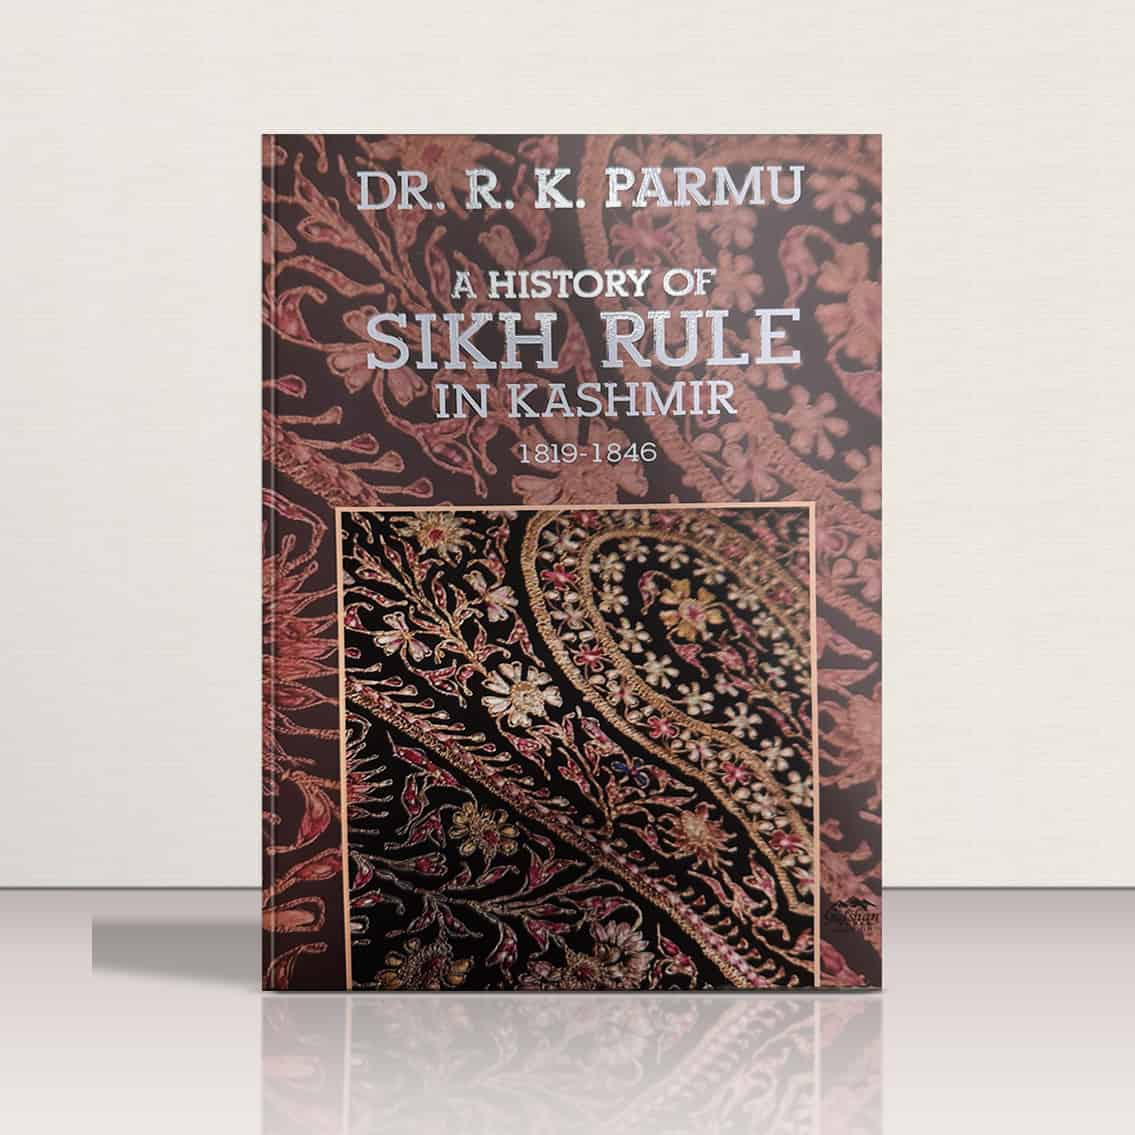 A History of Sikh Rule in Kashmir (1819-1846)